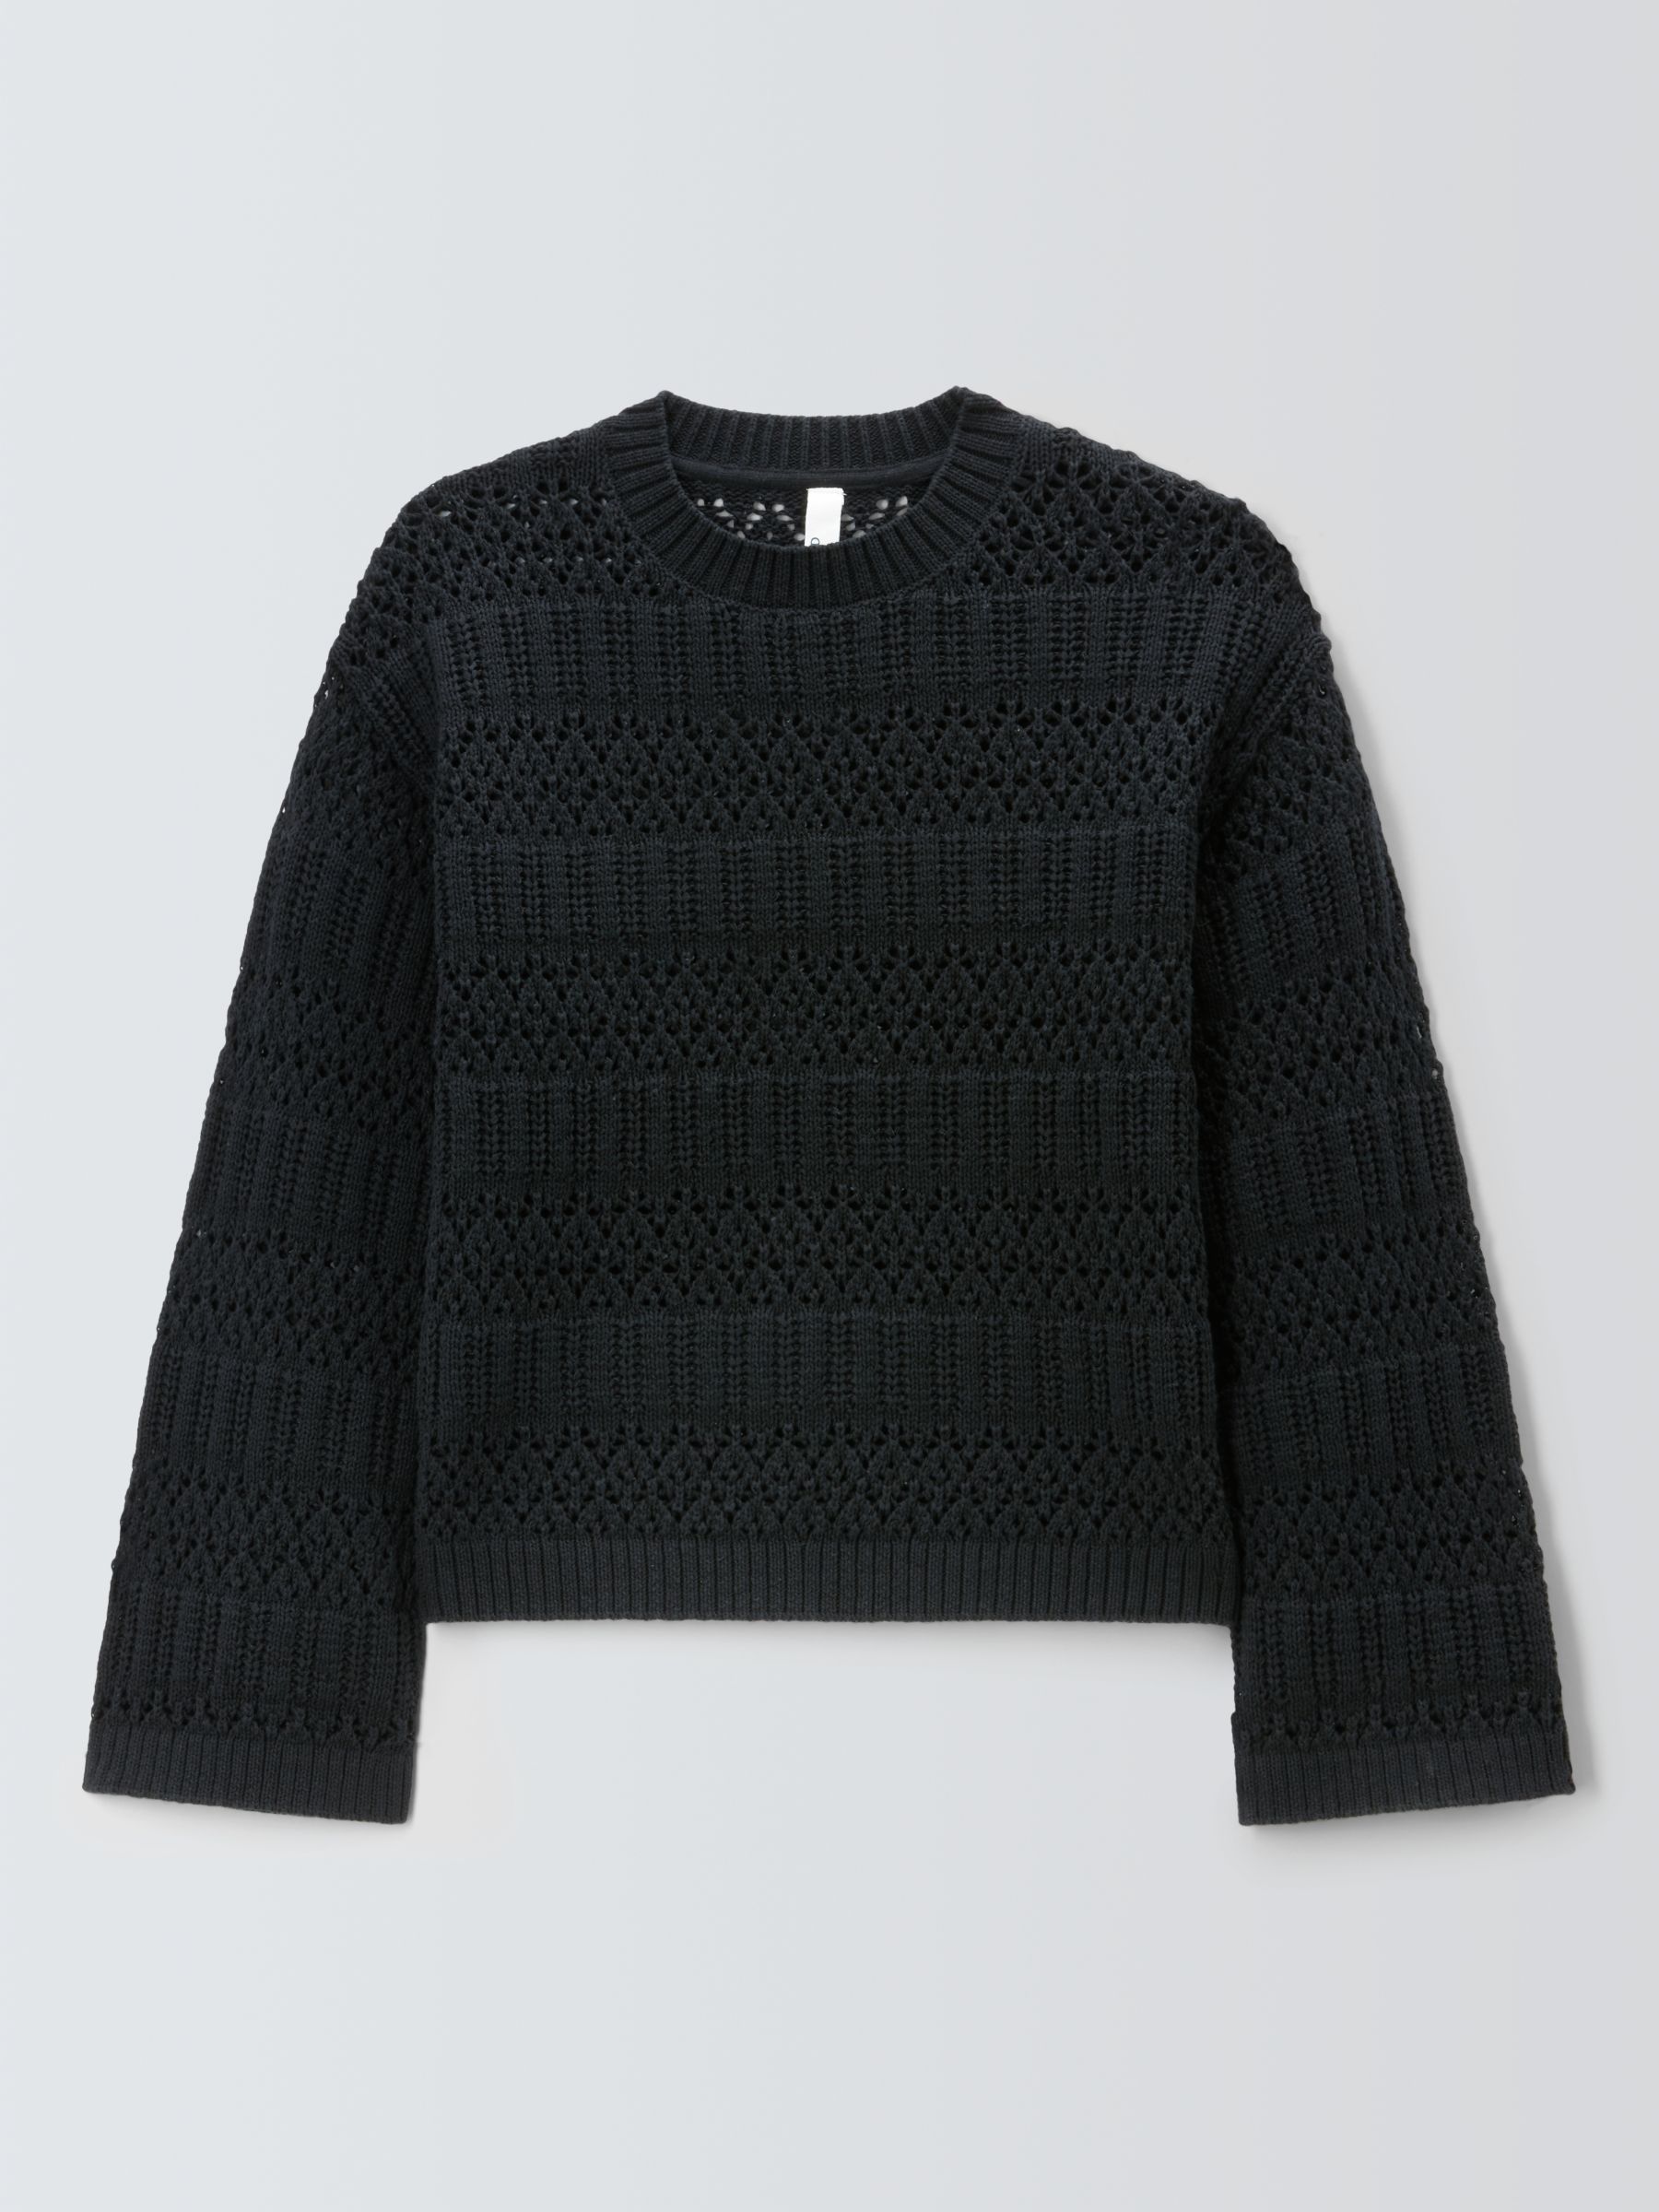 AND/OR Stevie Crochet Jumper, Black, XS